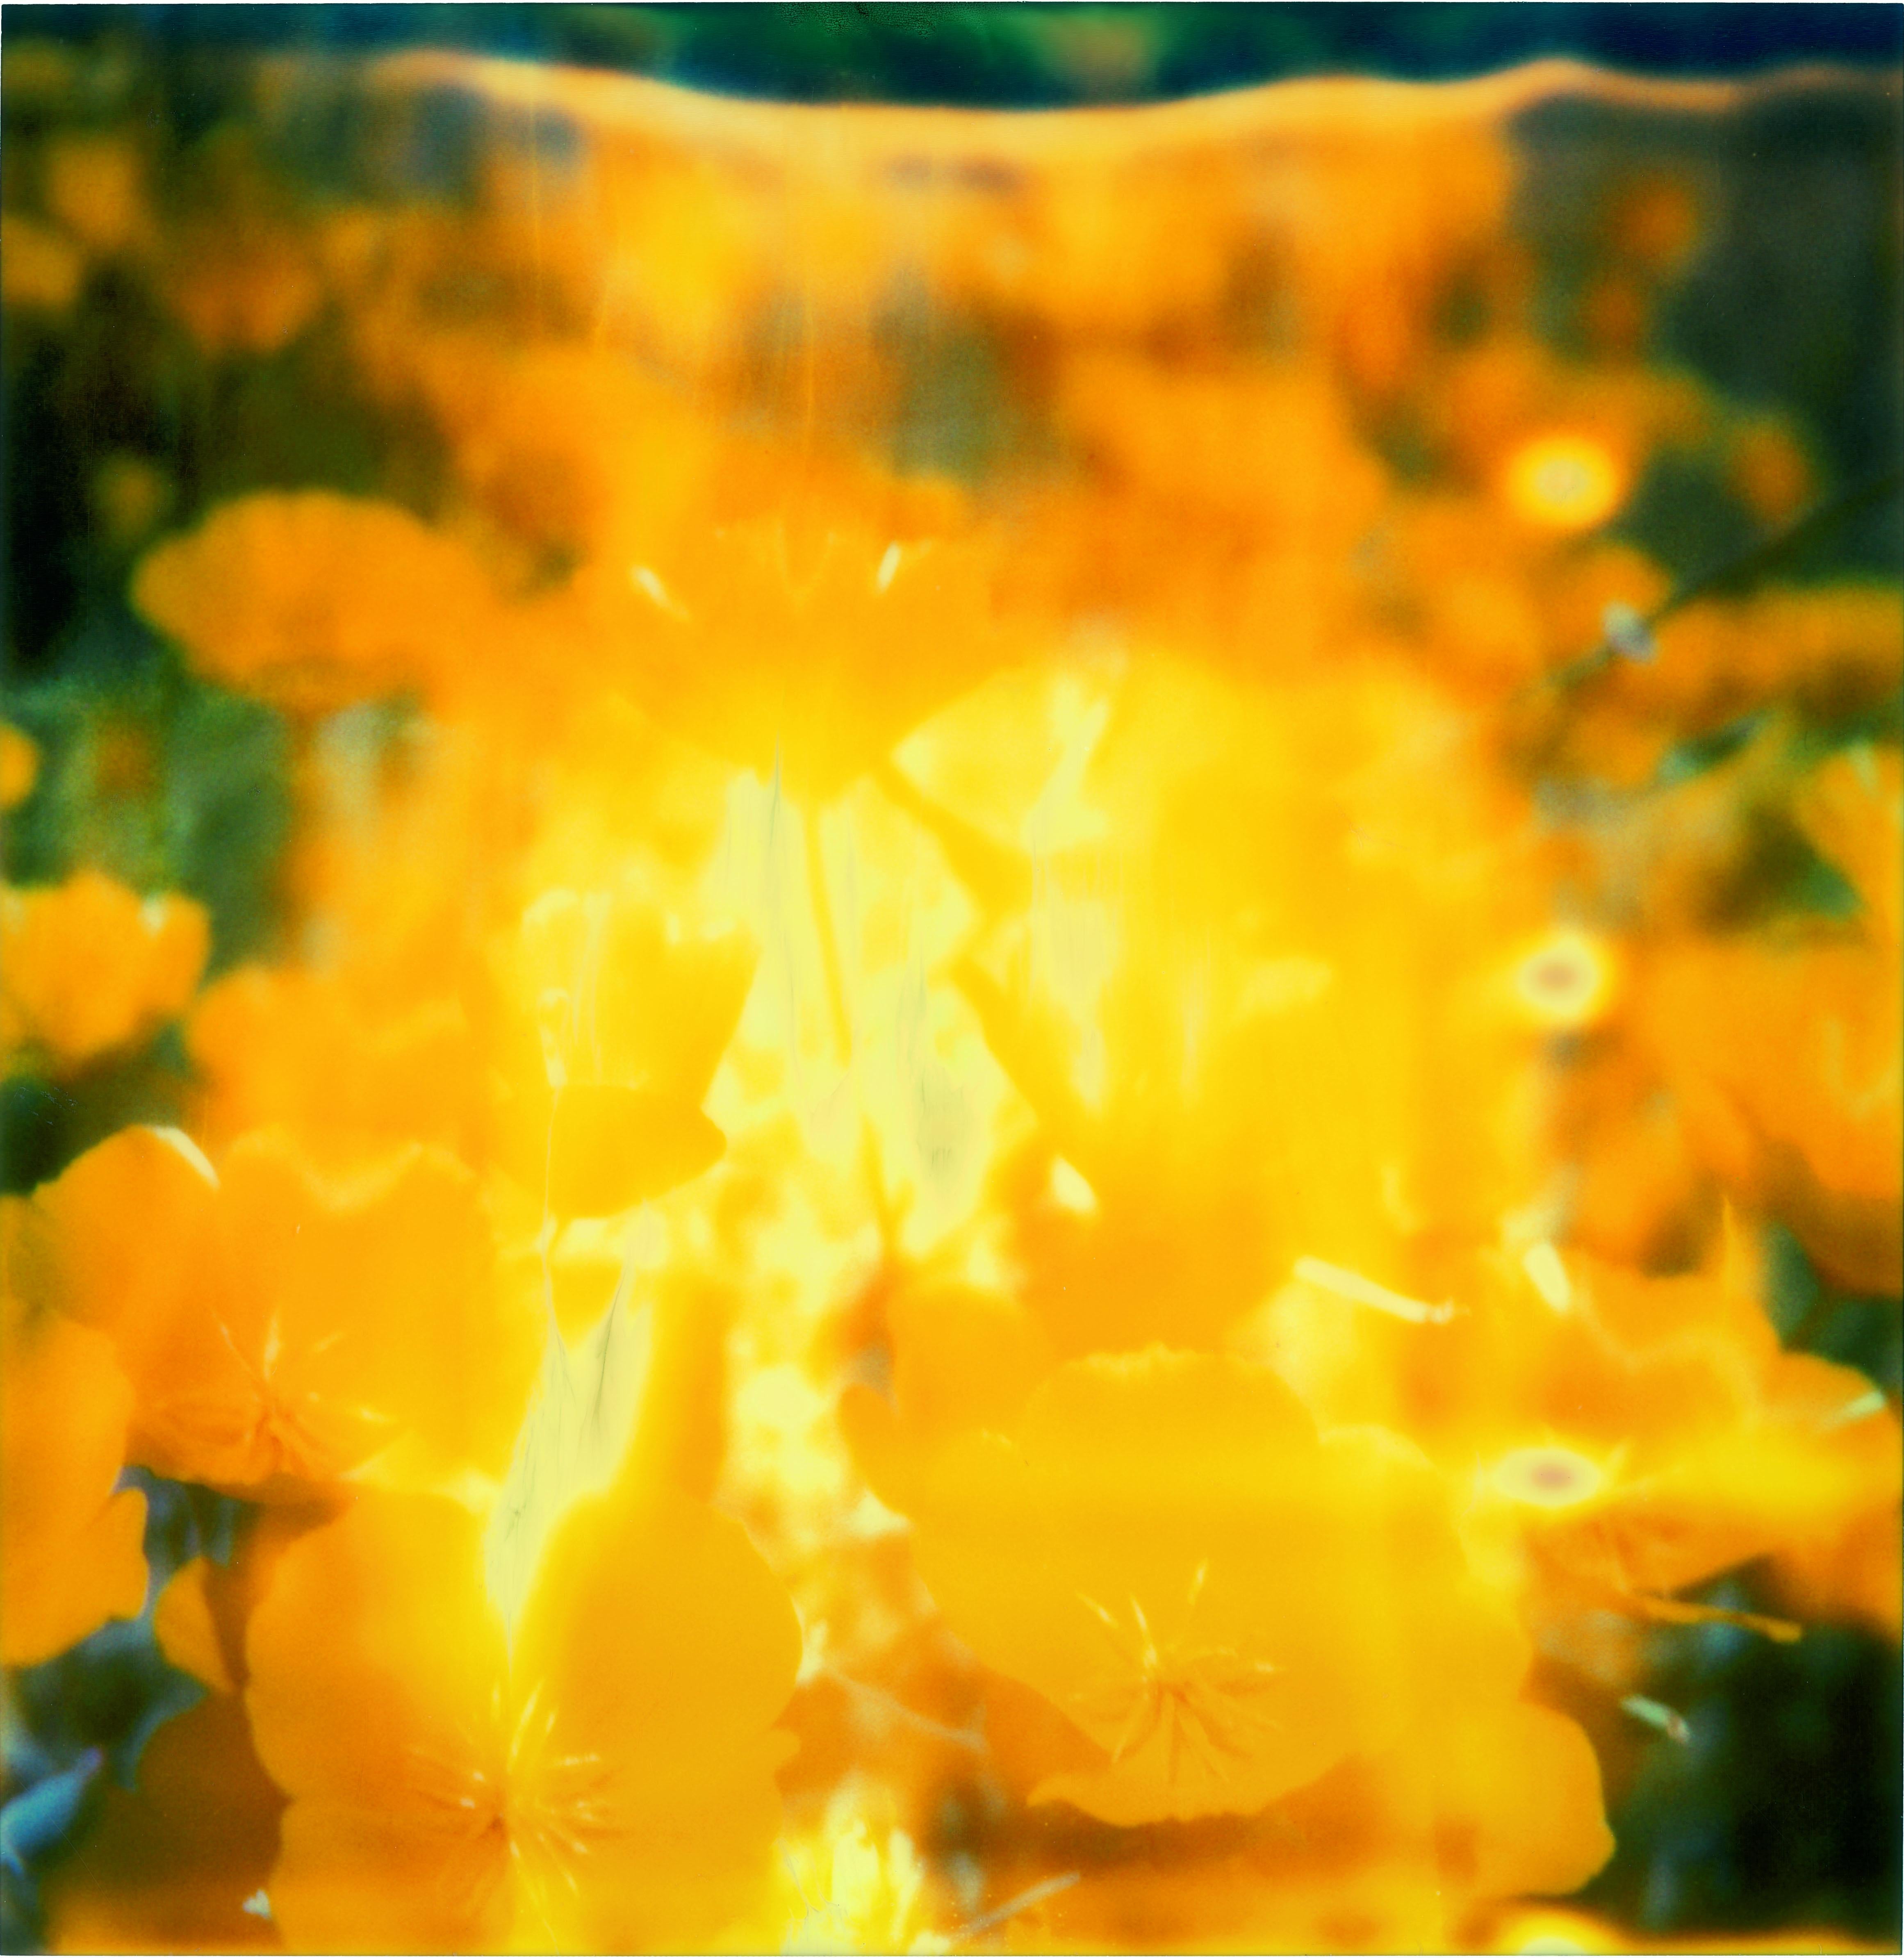 Stefanie Schneider Still-Life Photograph - Yellow Flower  - The Last Picture Show, analog, 128x126cm, mounted